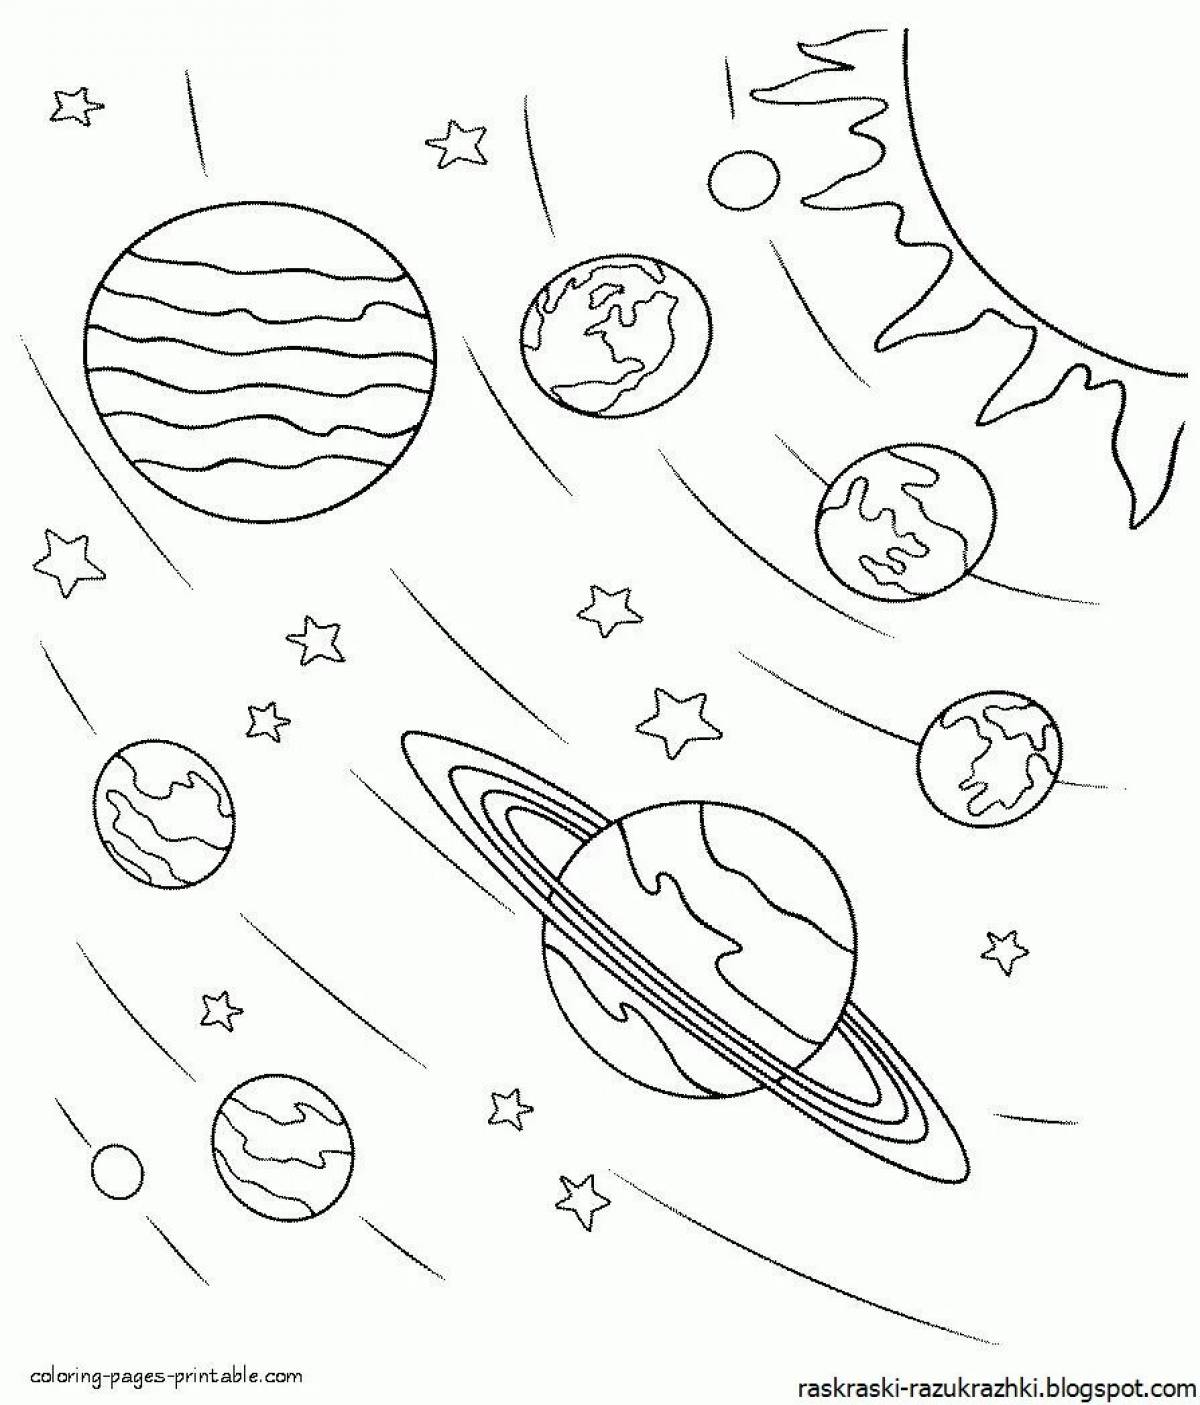 Раскраски Космос и астрономия